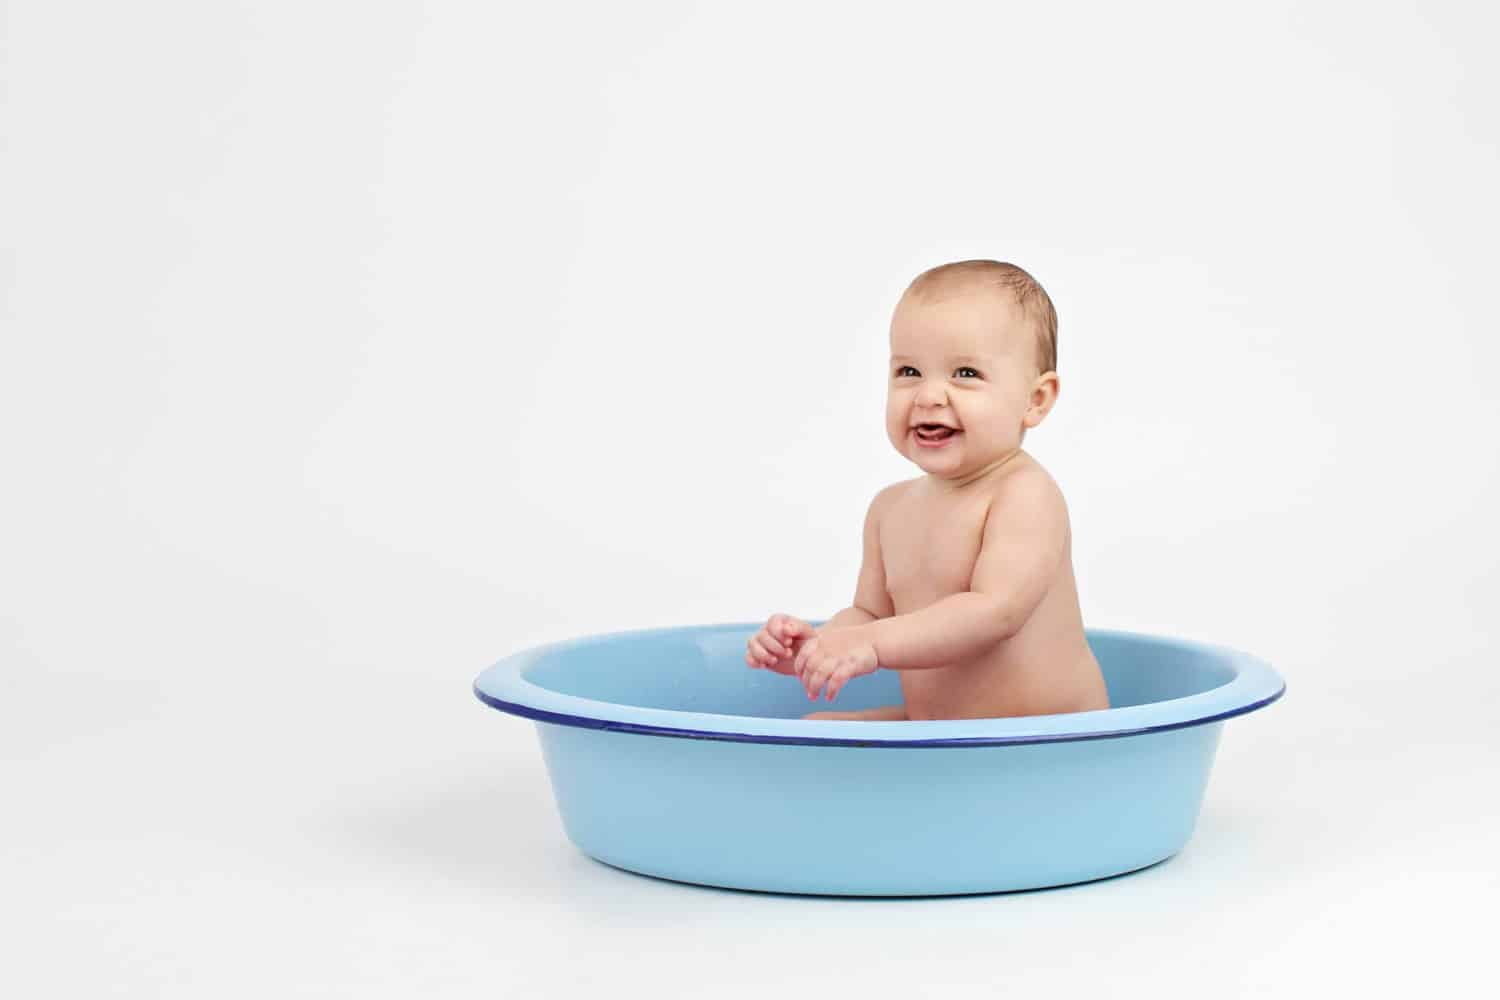 A six-month-old in a bathtub.